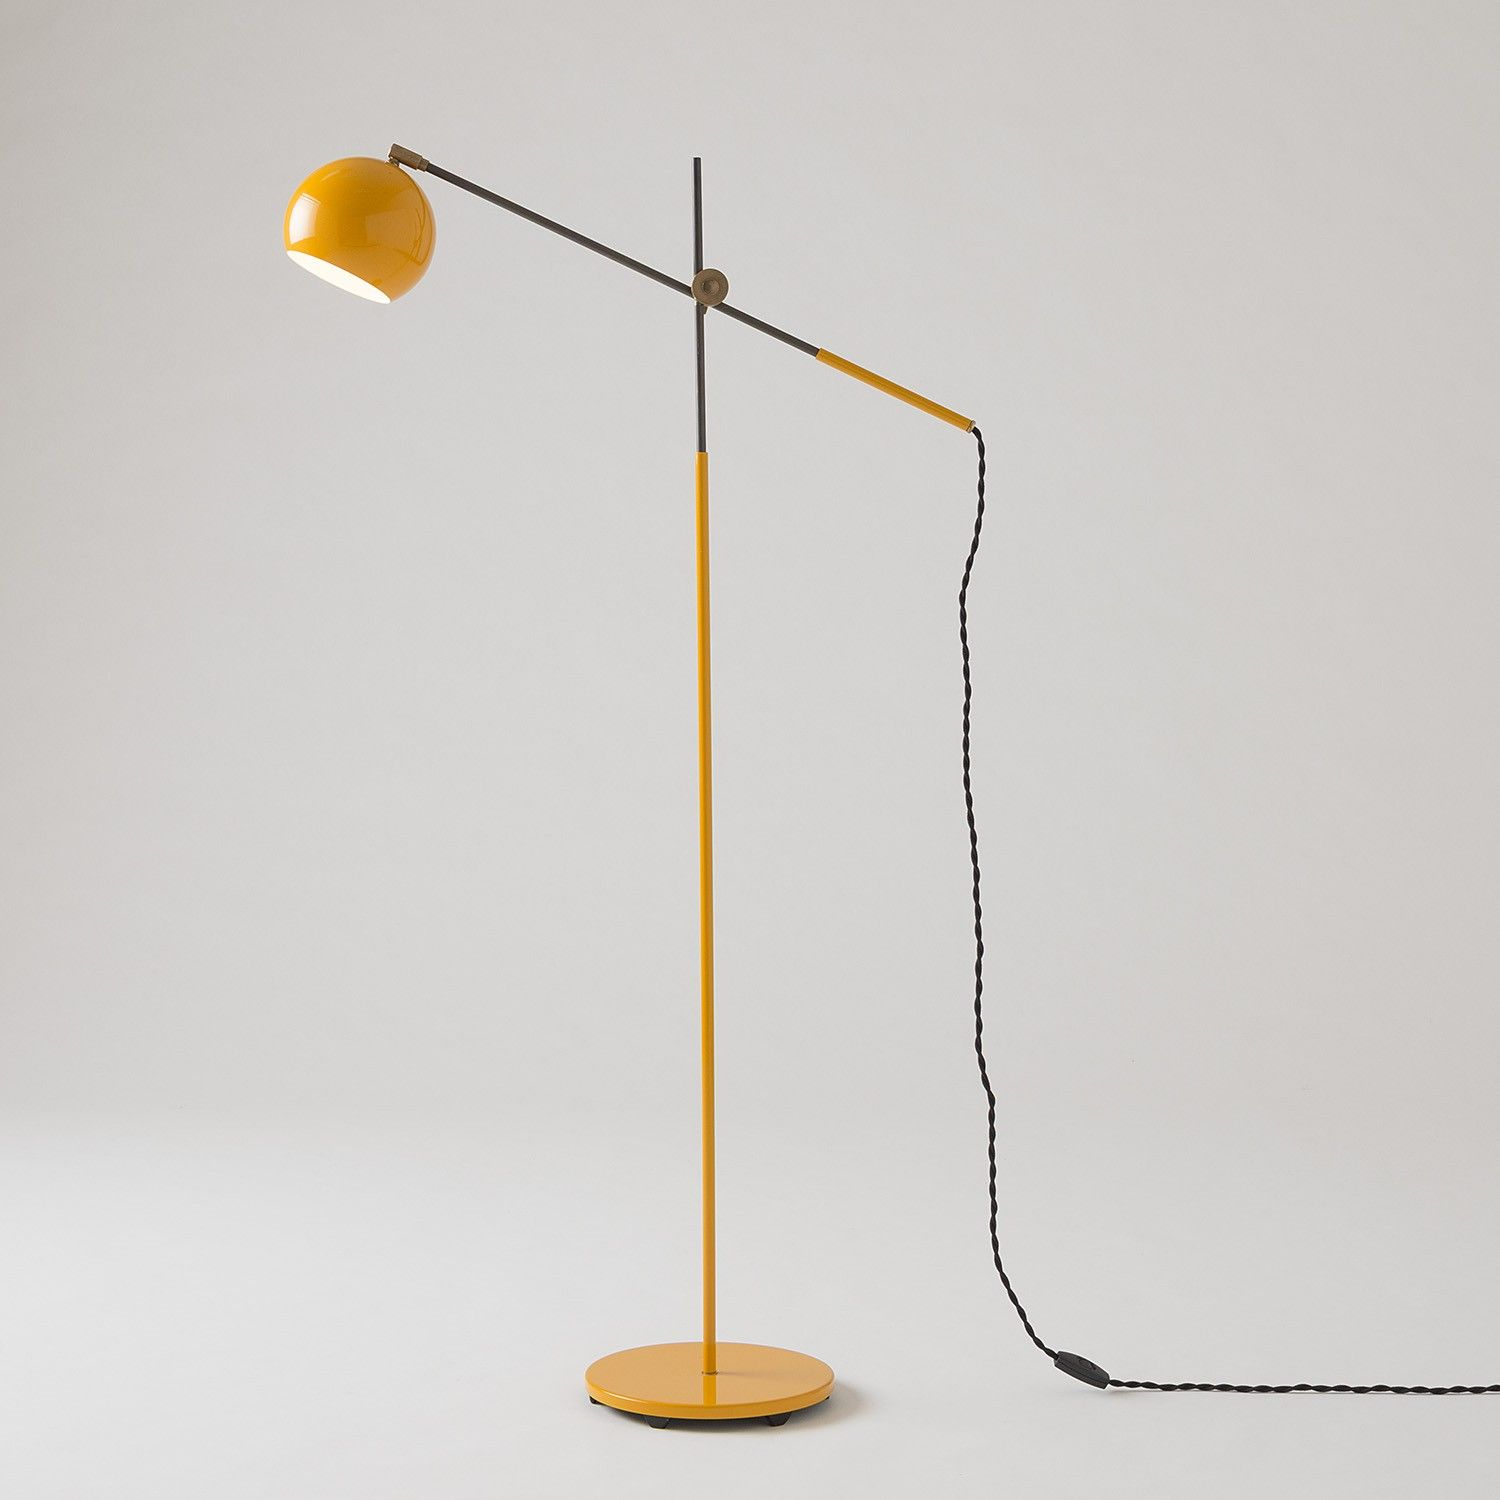 Studio Floor Lamp Industrial Yellow In 2019 Industrial pertaining to size 1500 X 1500